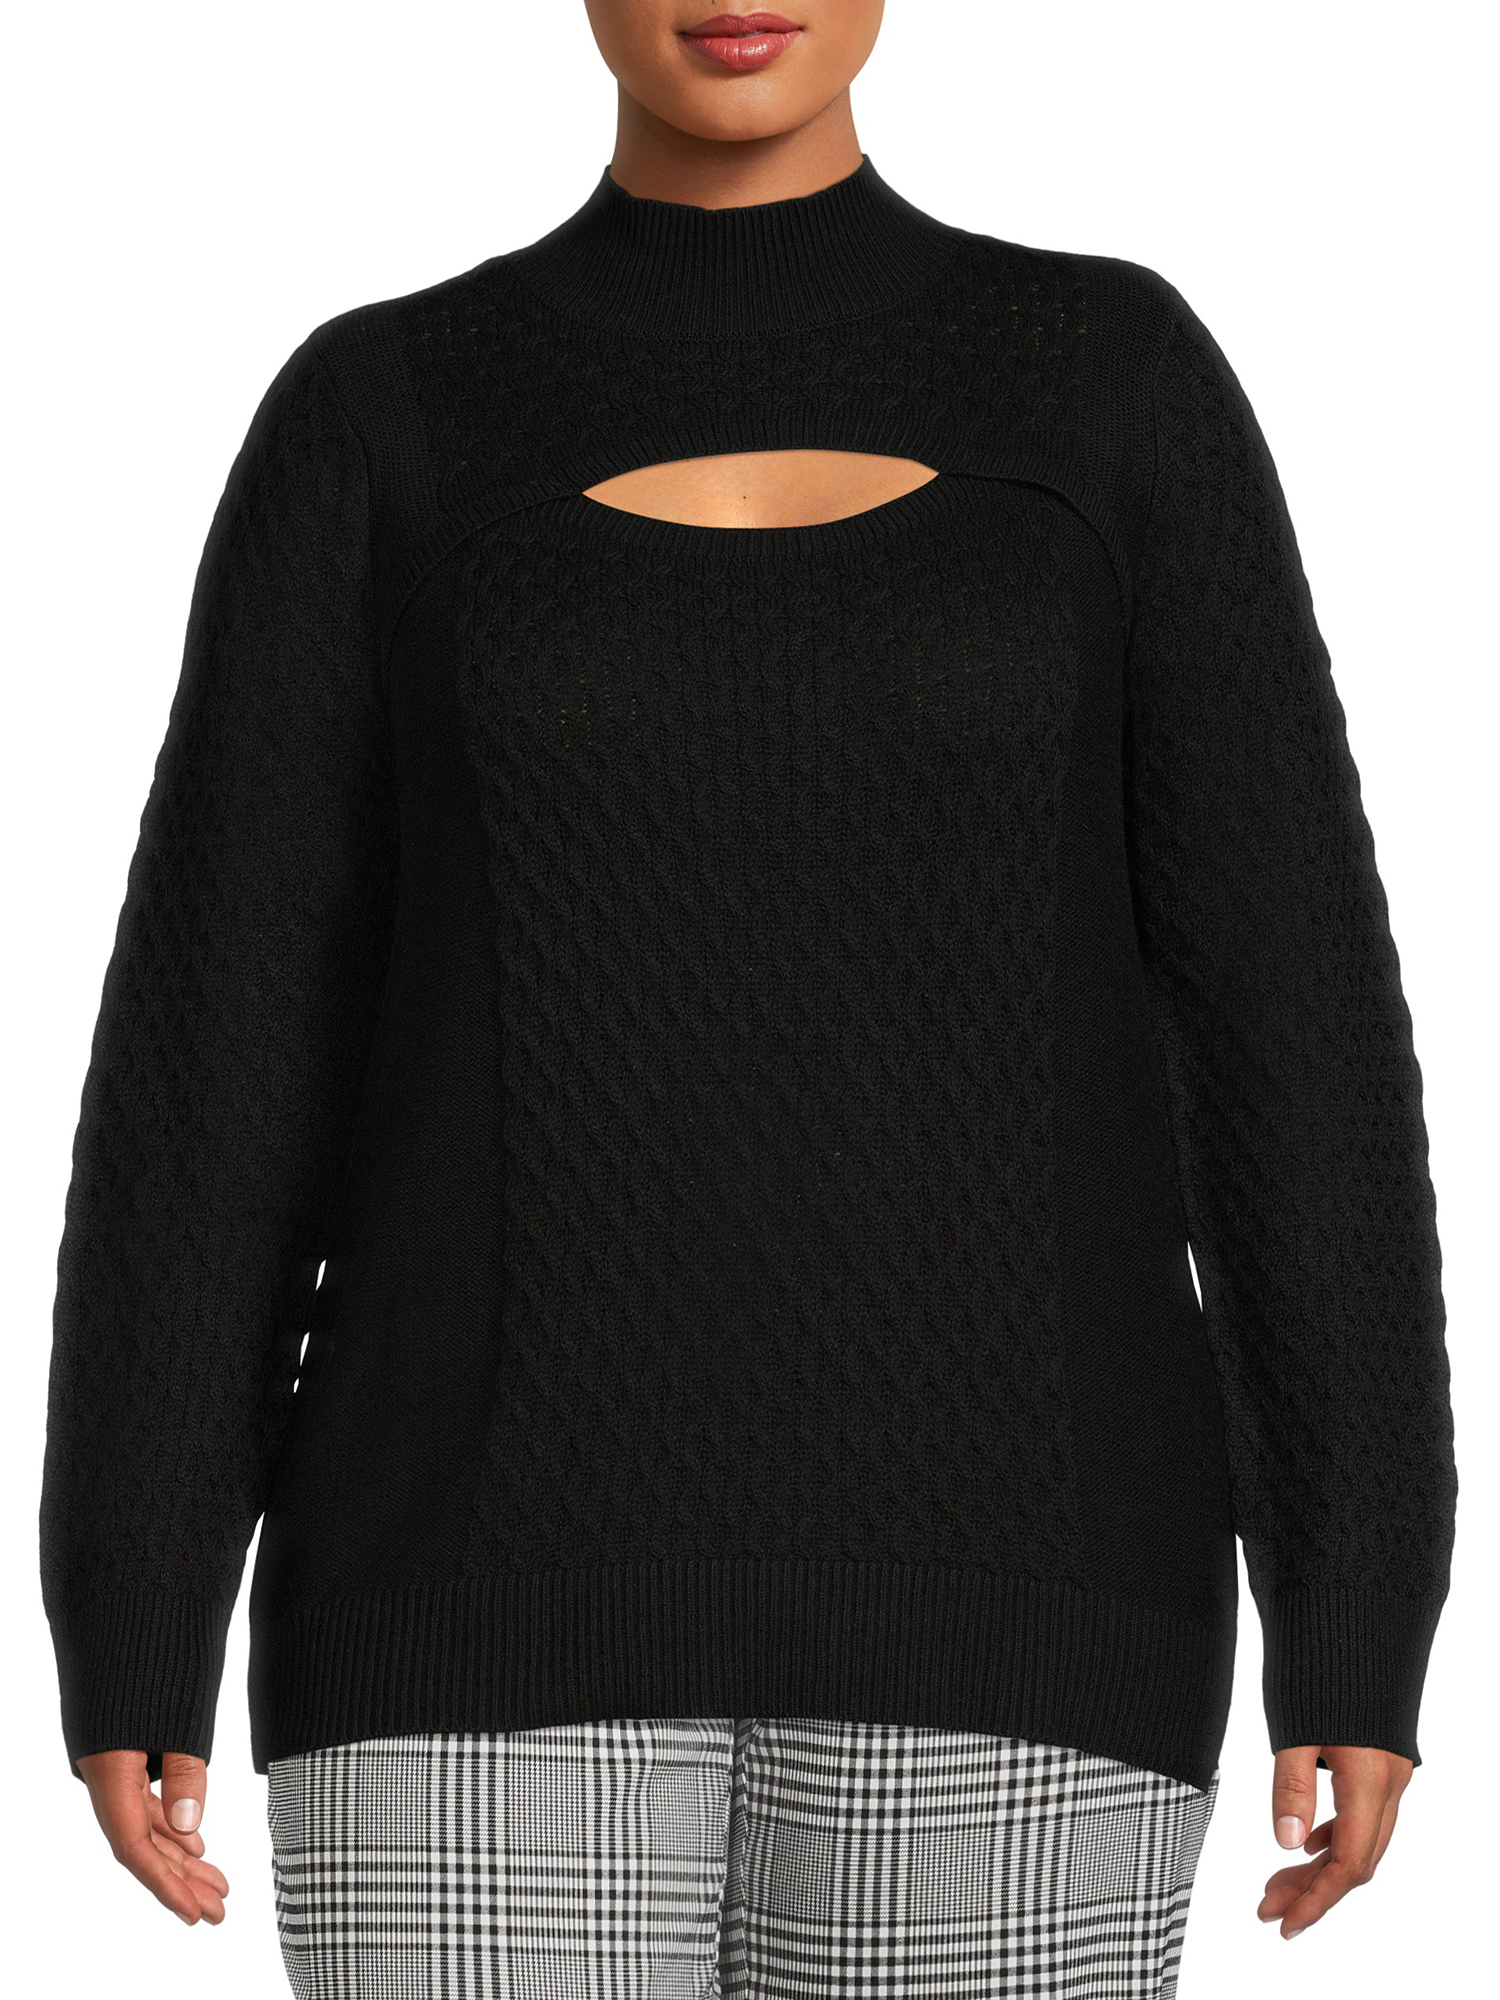 Terra & Sky Women's Cutout Pullover Sweater - image 1 of 5